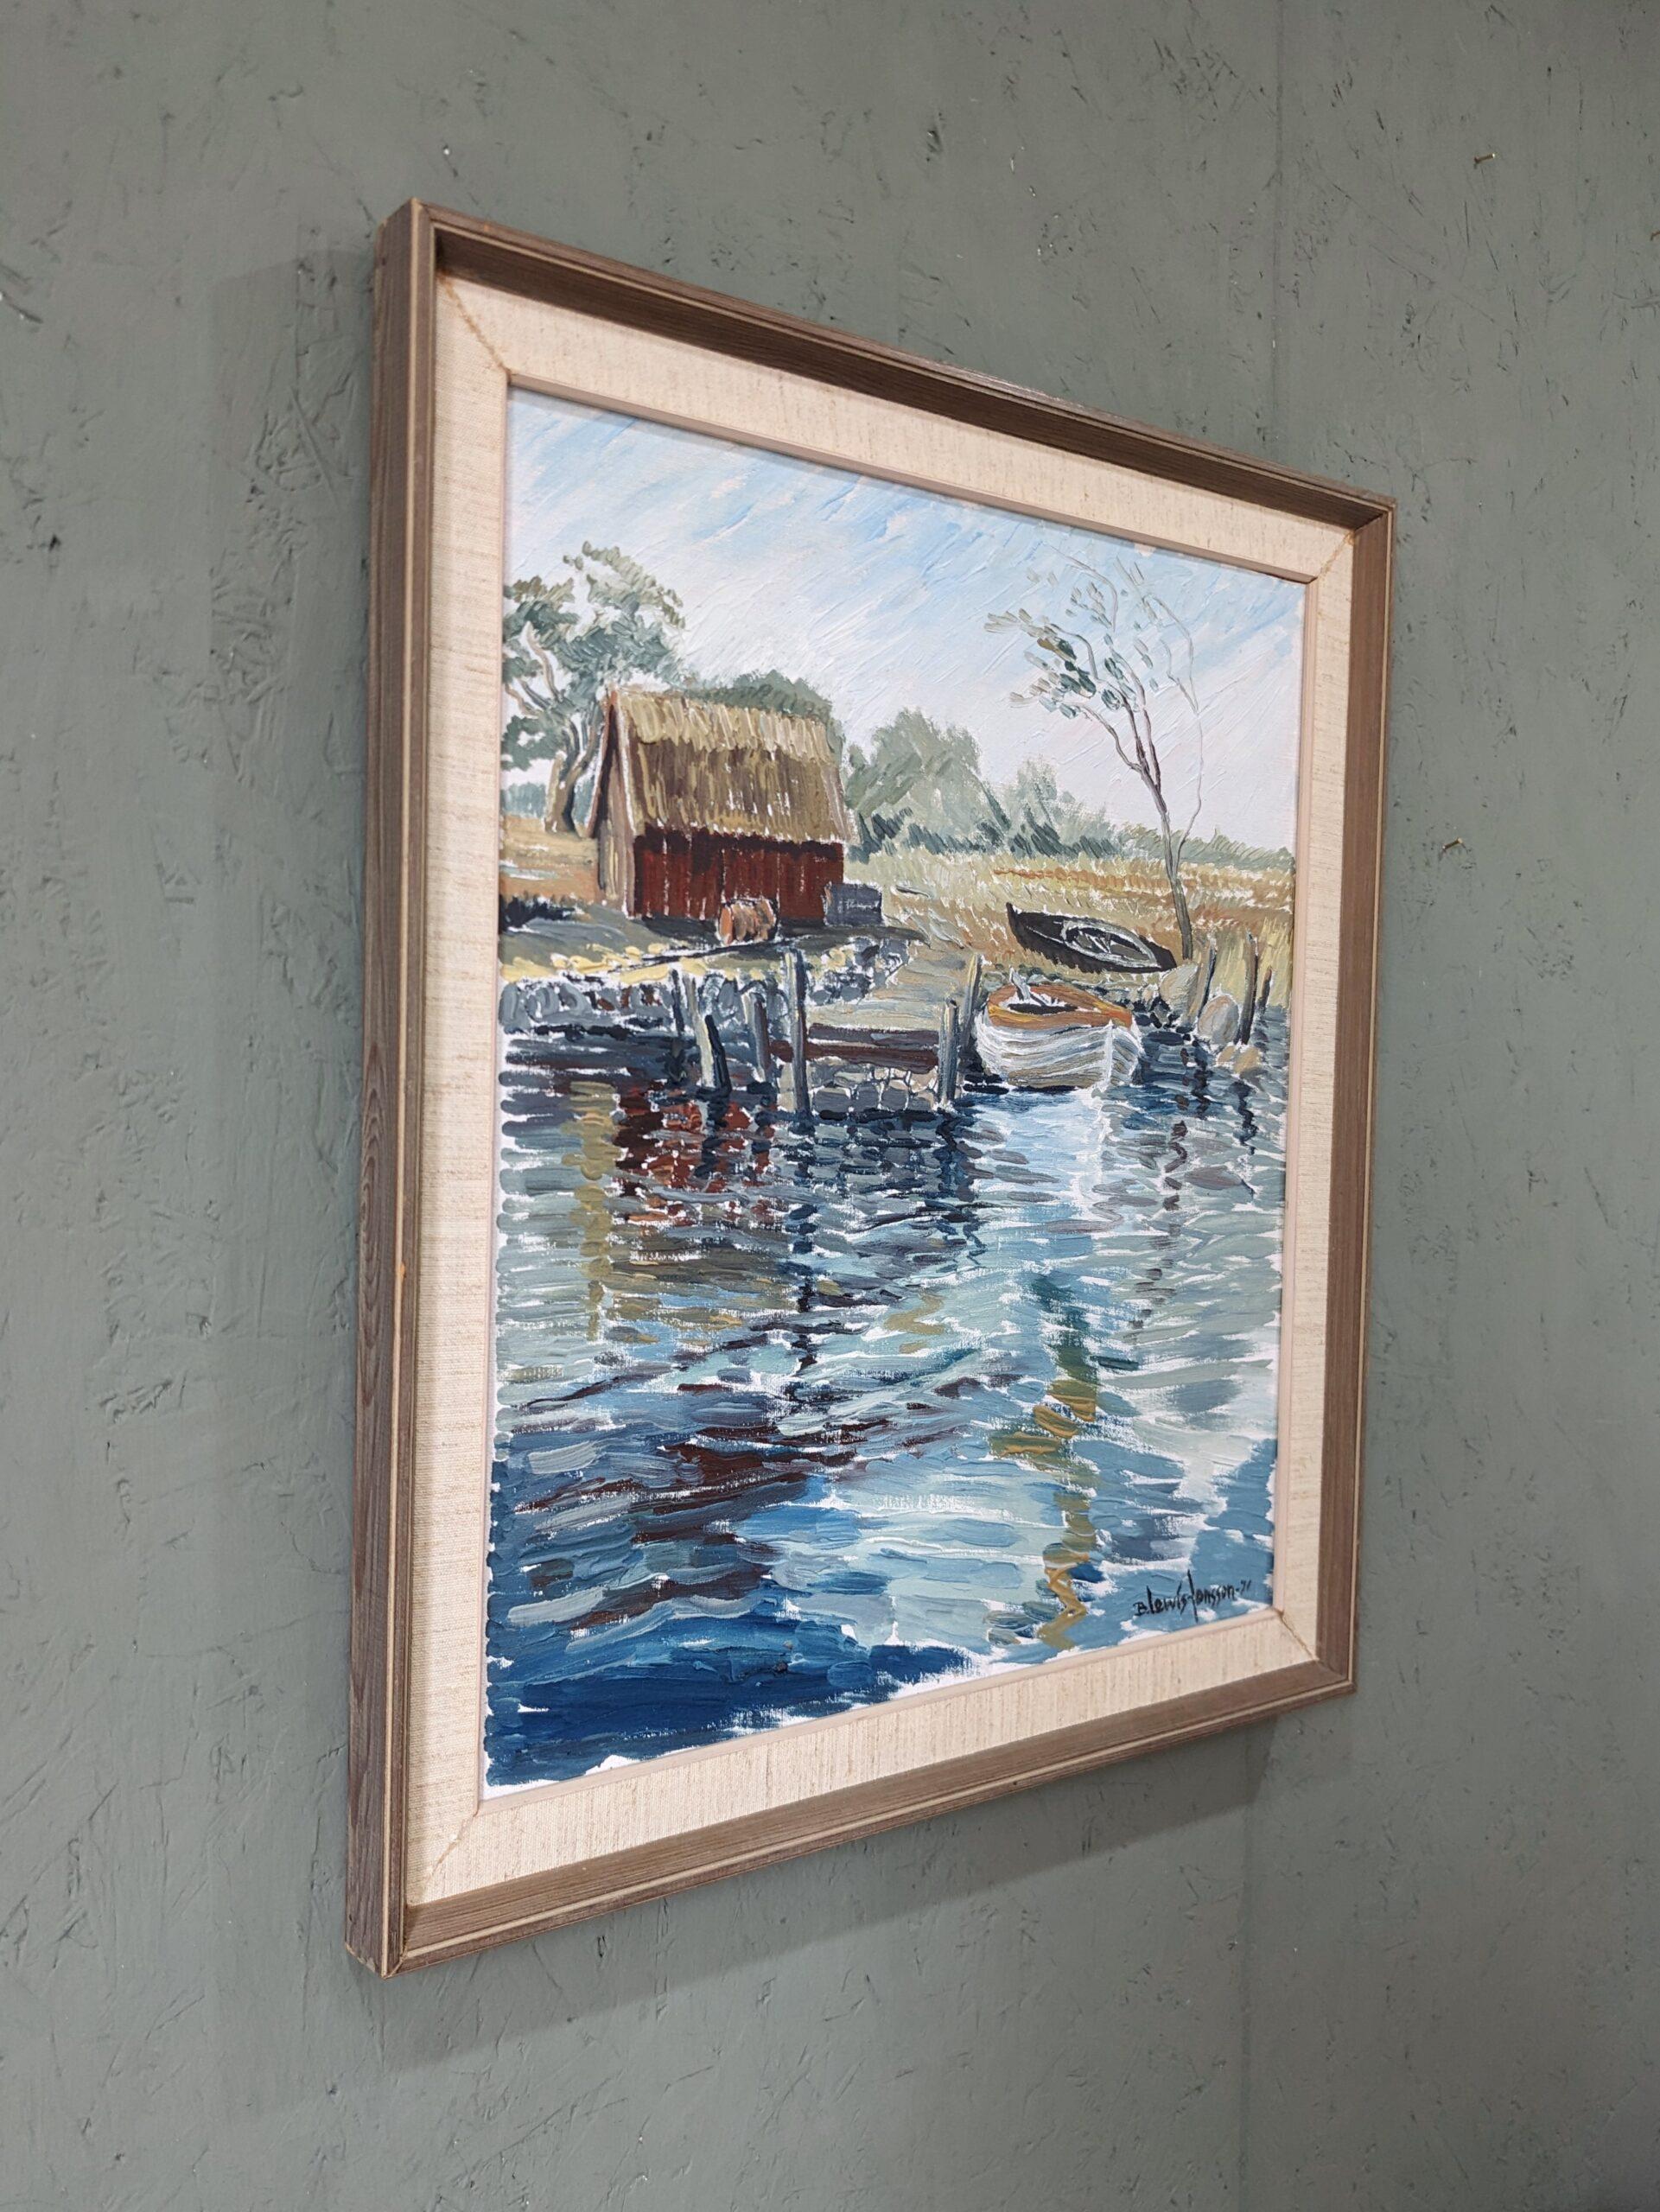 1971 Mid-Century Modern Swedish Framed River Landscape Oil Painting - Boathouse For Sale 2